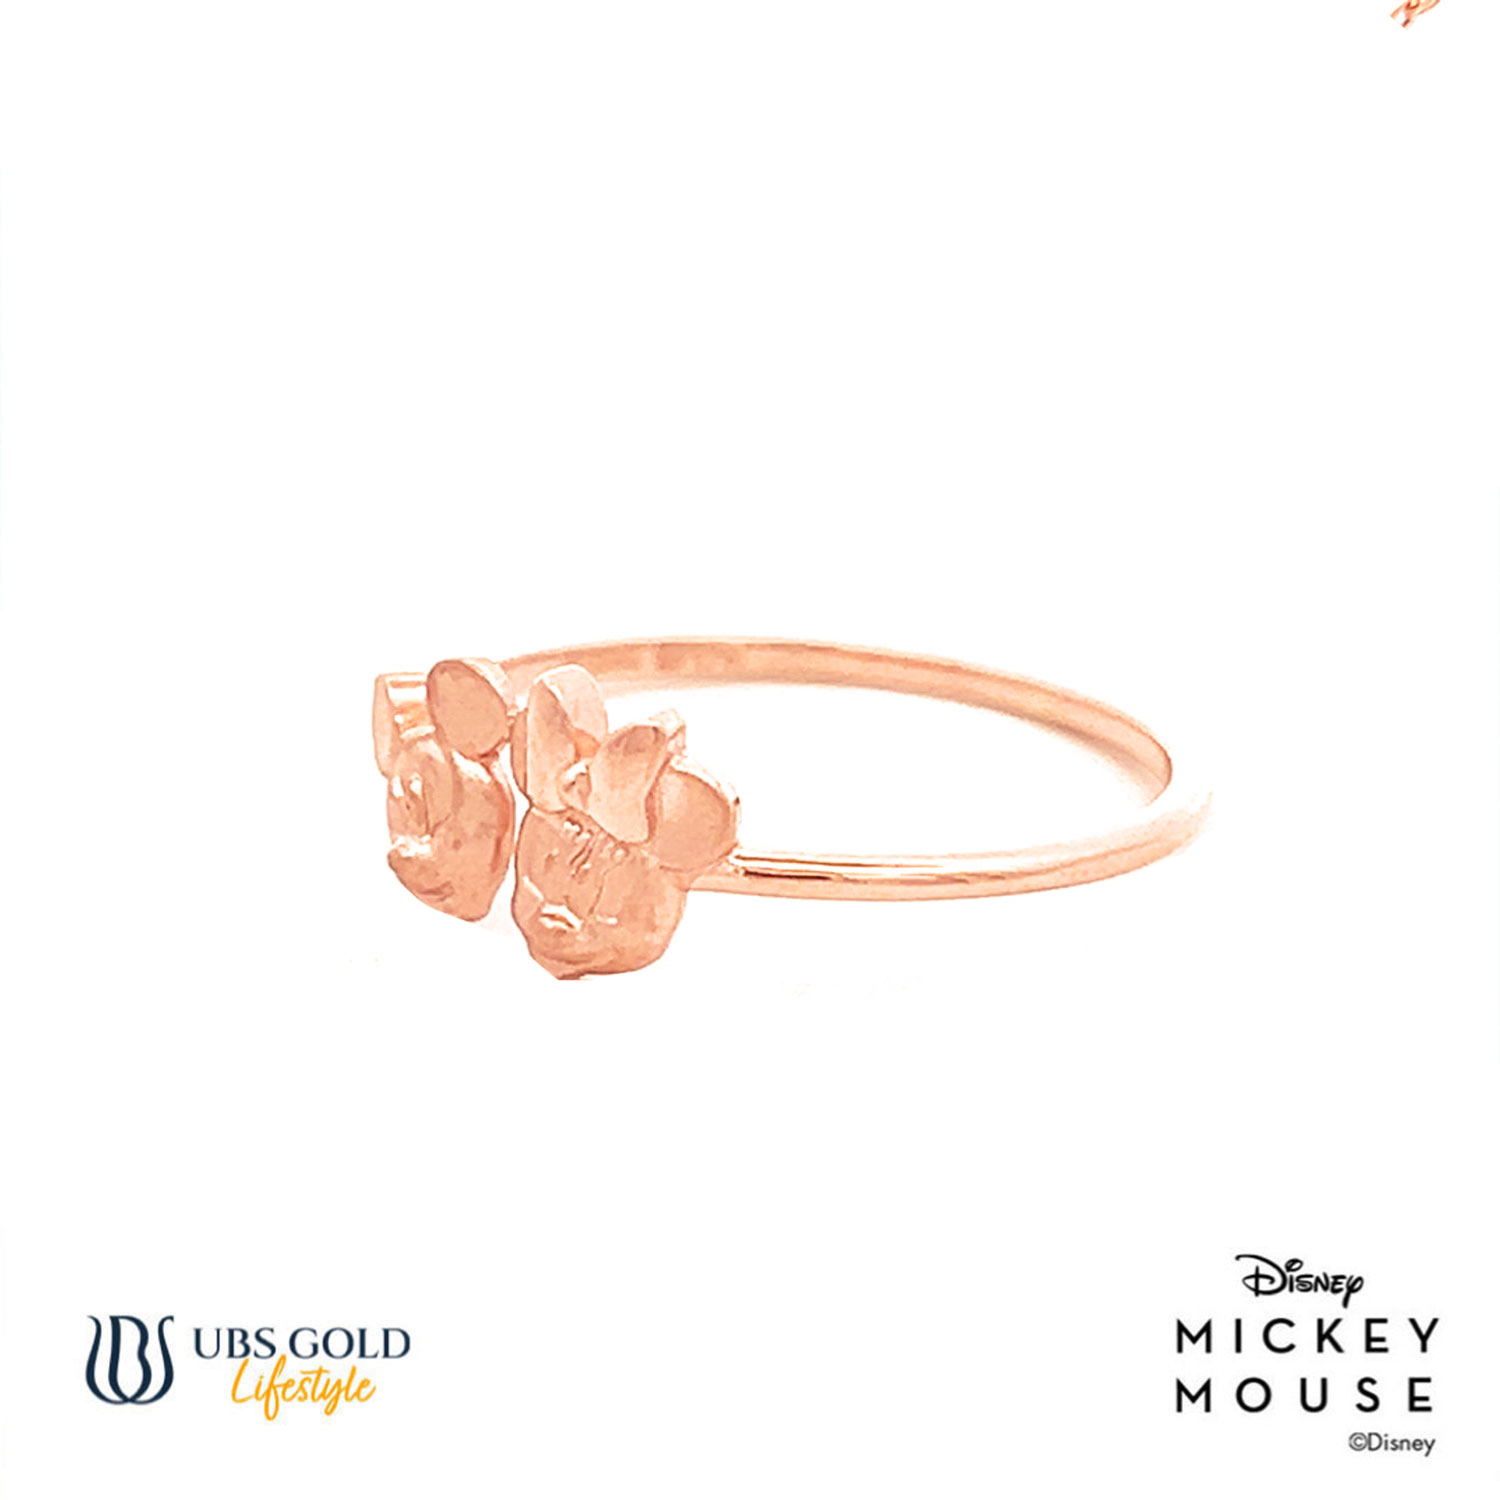 UBS Gold Cincin Emas Disney Mickey Minnie Mouse - Ccy0126 - 17K